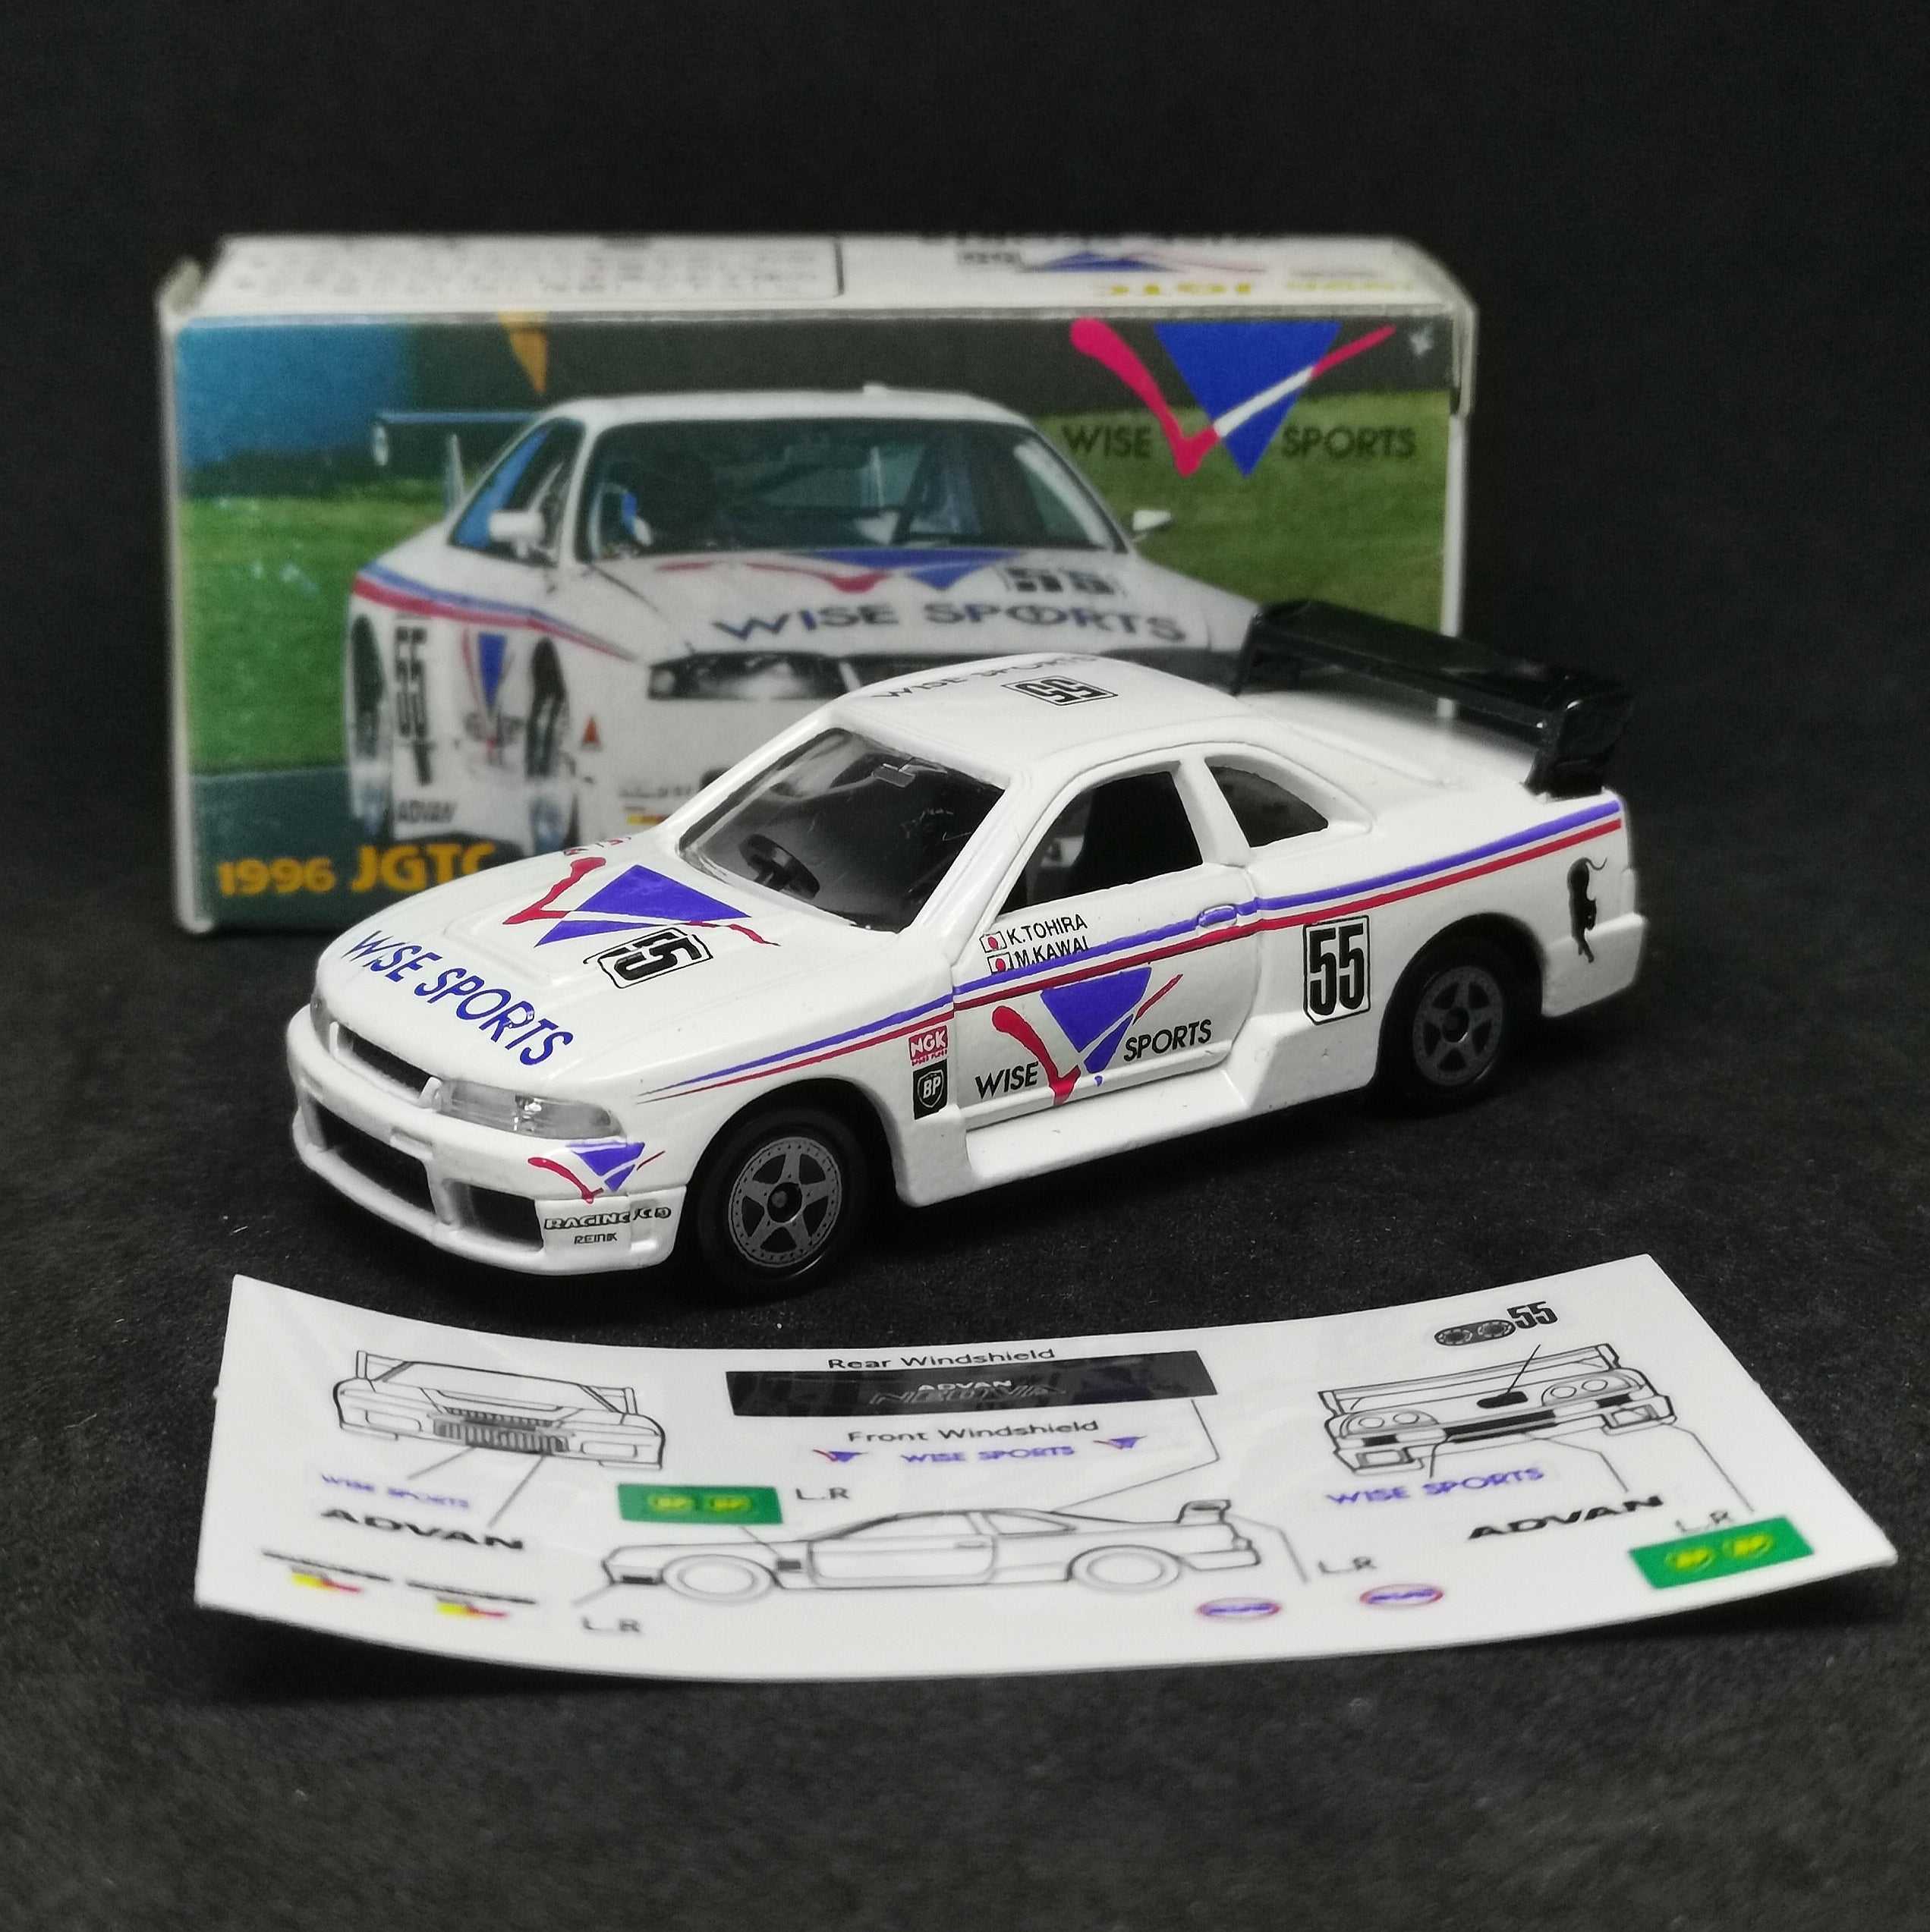 Tomica iiado Exclusive 1996 JGTC Wise Sport Nissan Skyline GT-R R33 #5